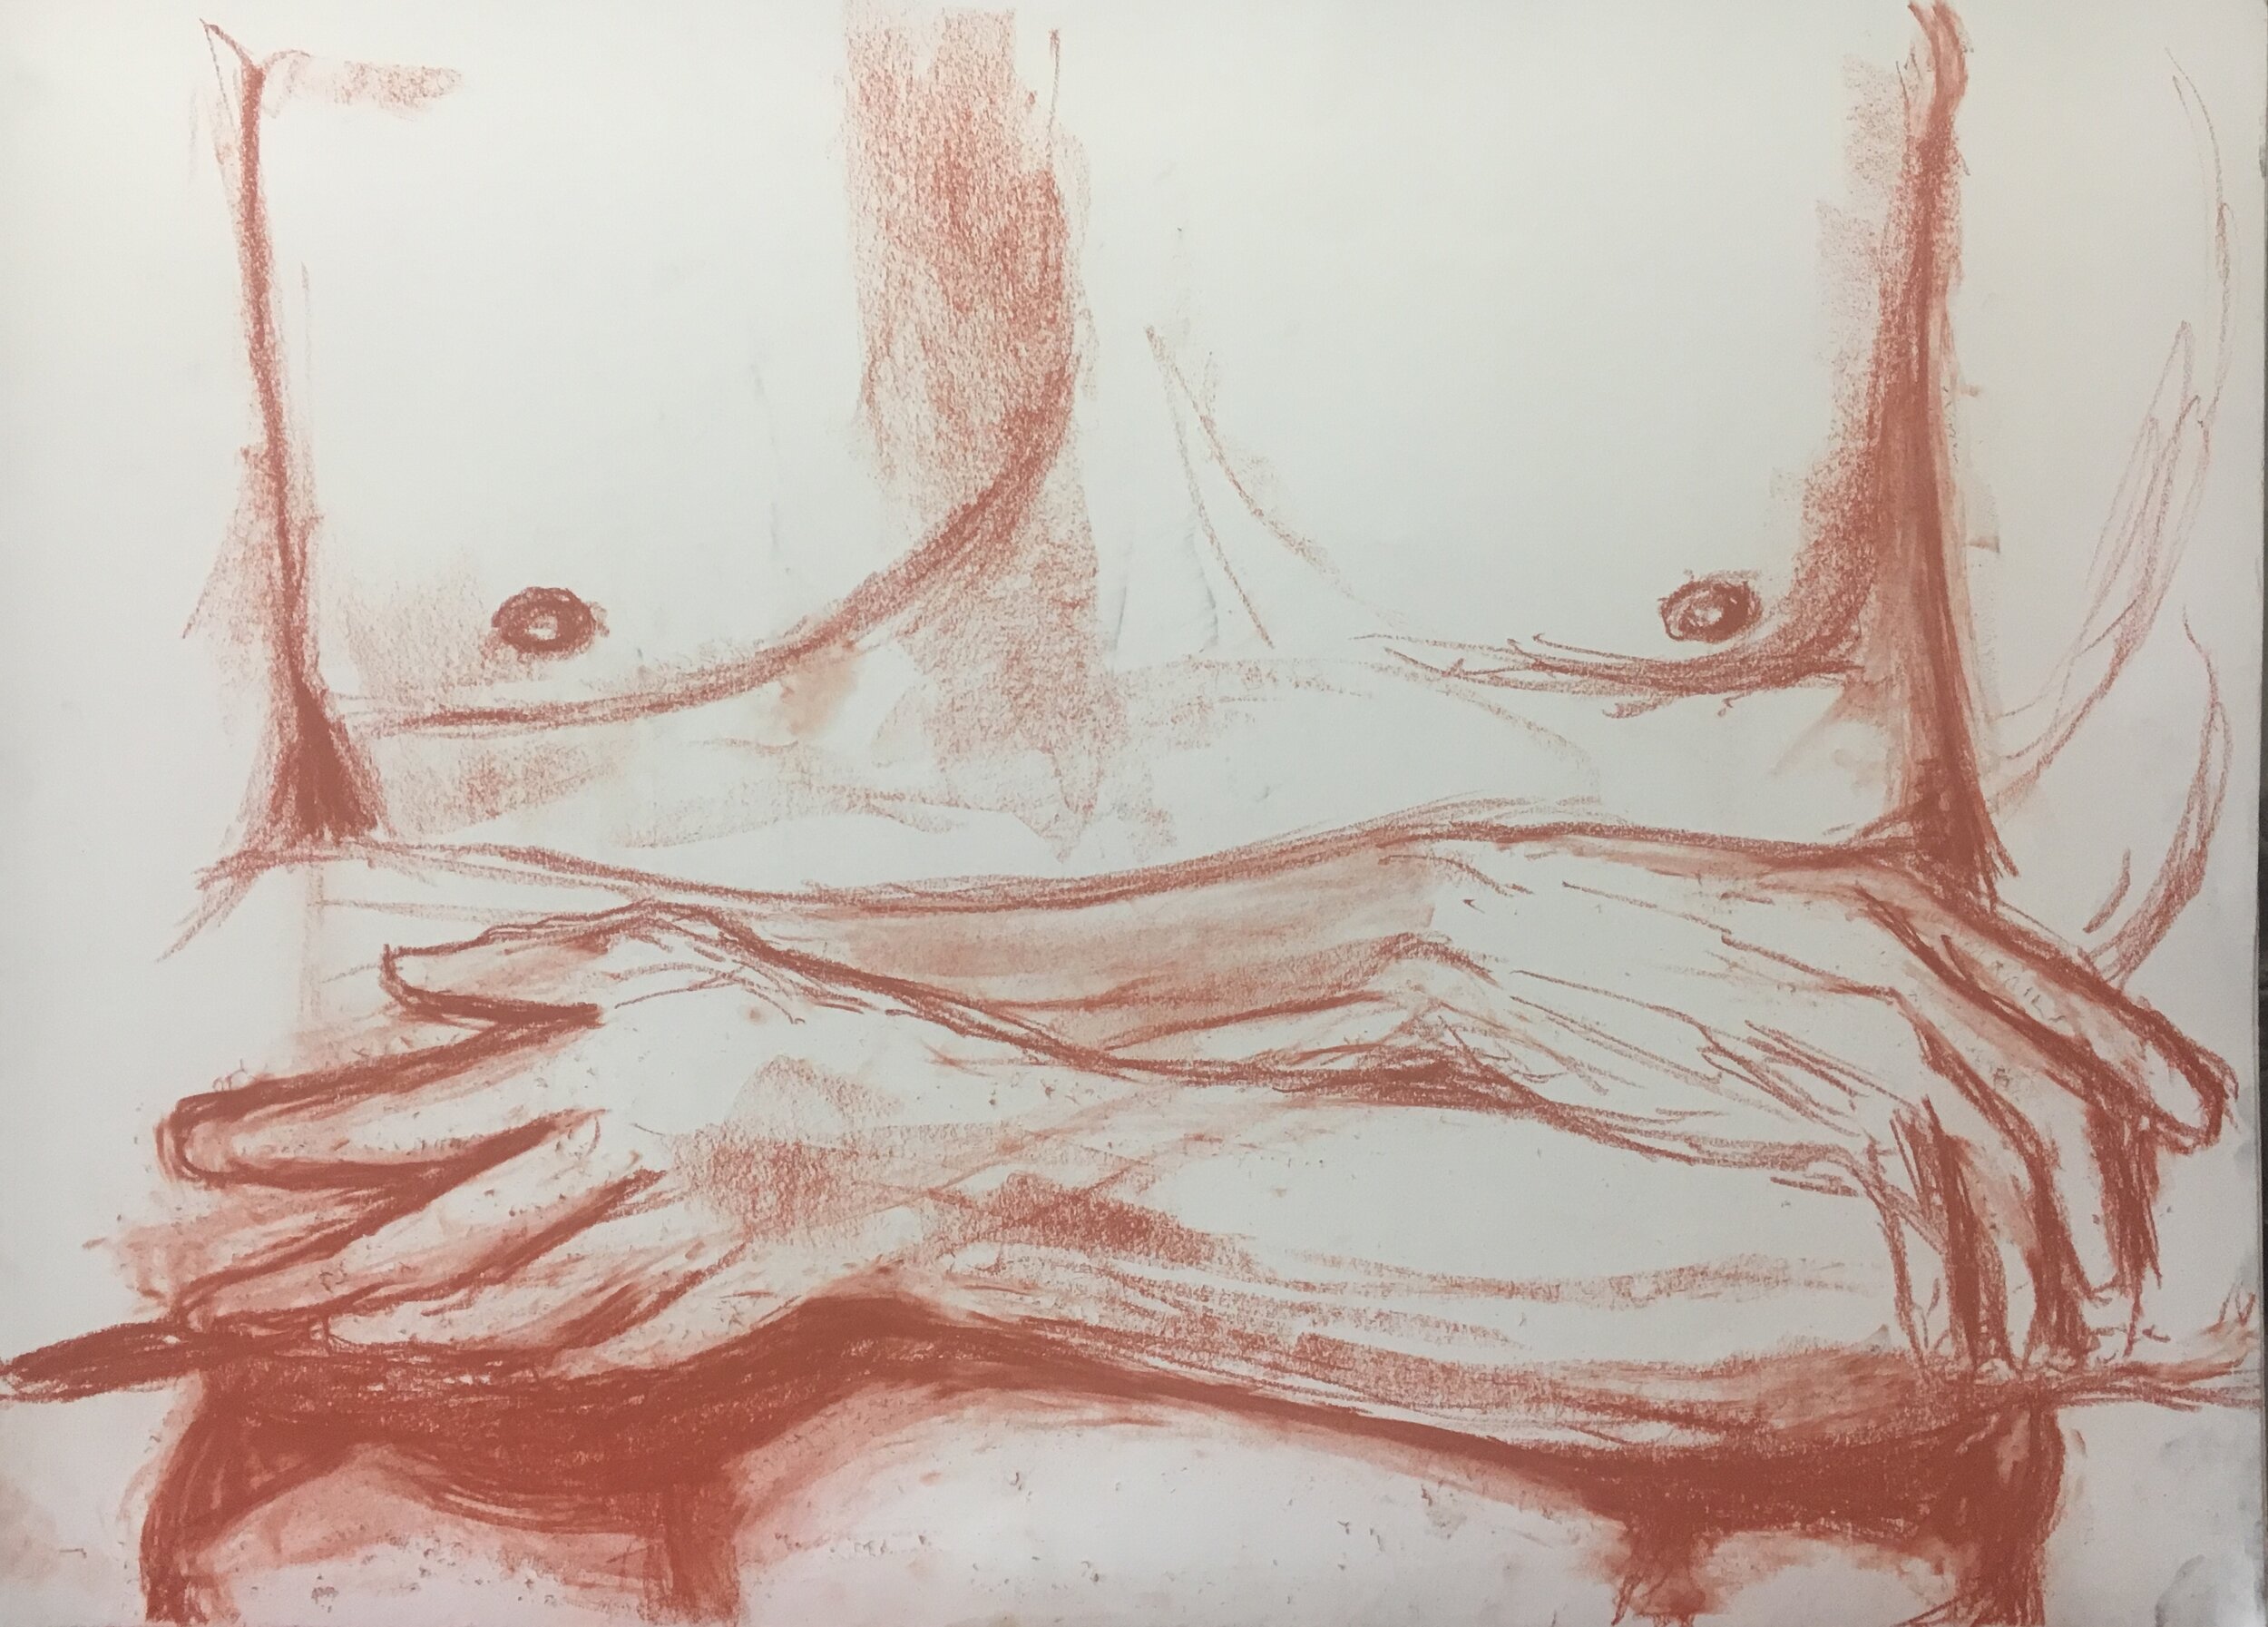 Sketch Hands and Torso (07 March 2020)